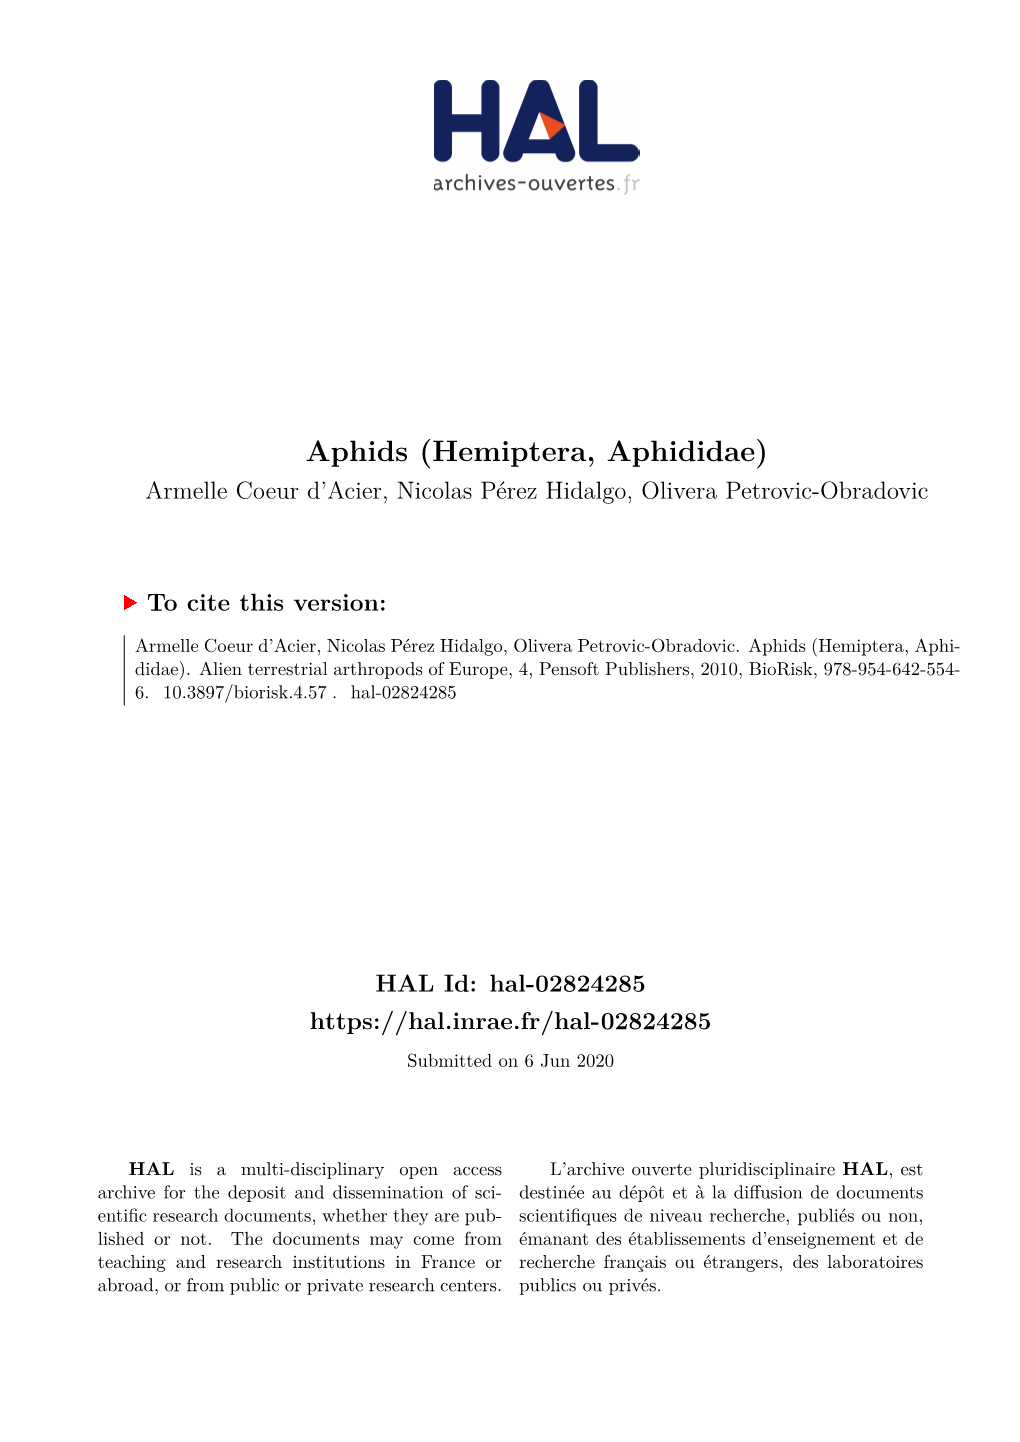 Aphids (Hemiptera, Aphididae) Armelle Coeur D’Acier, Nicolas Pérez Hidalgo, Olivera Petrovic-Obradovic